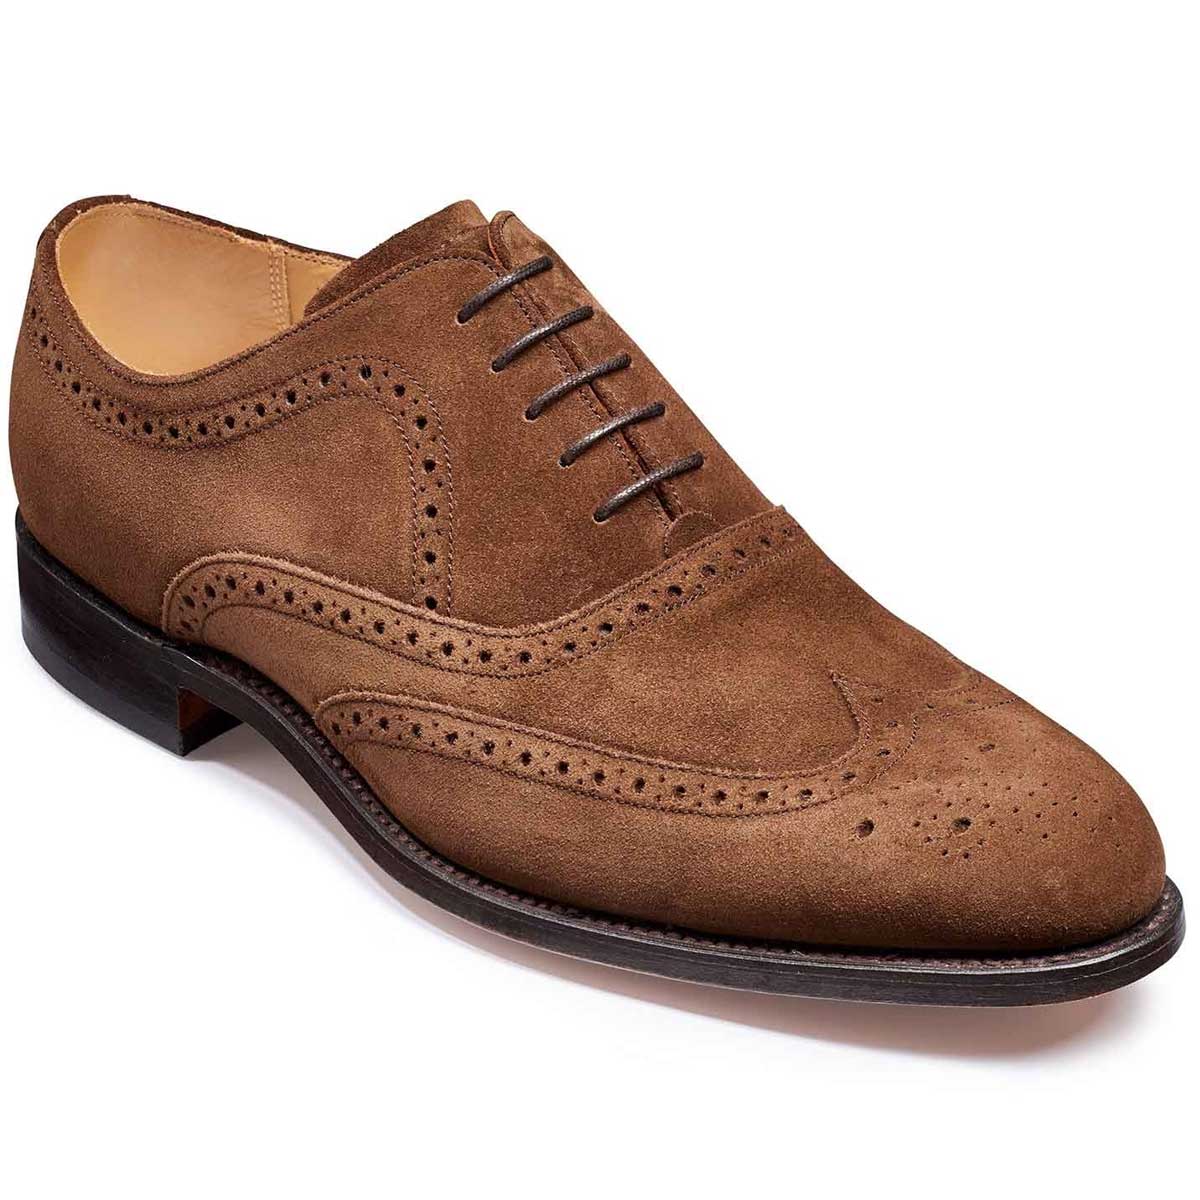 Barker Hampstead Brogue Oxford Shoes - Castagnia Suede